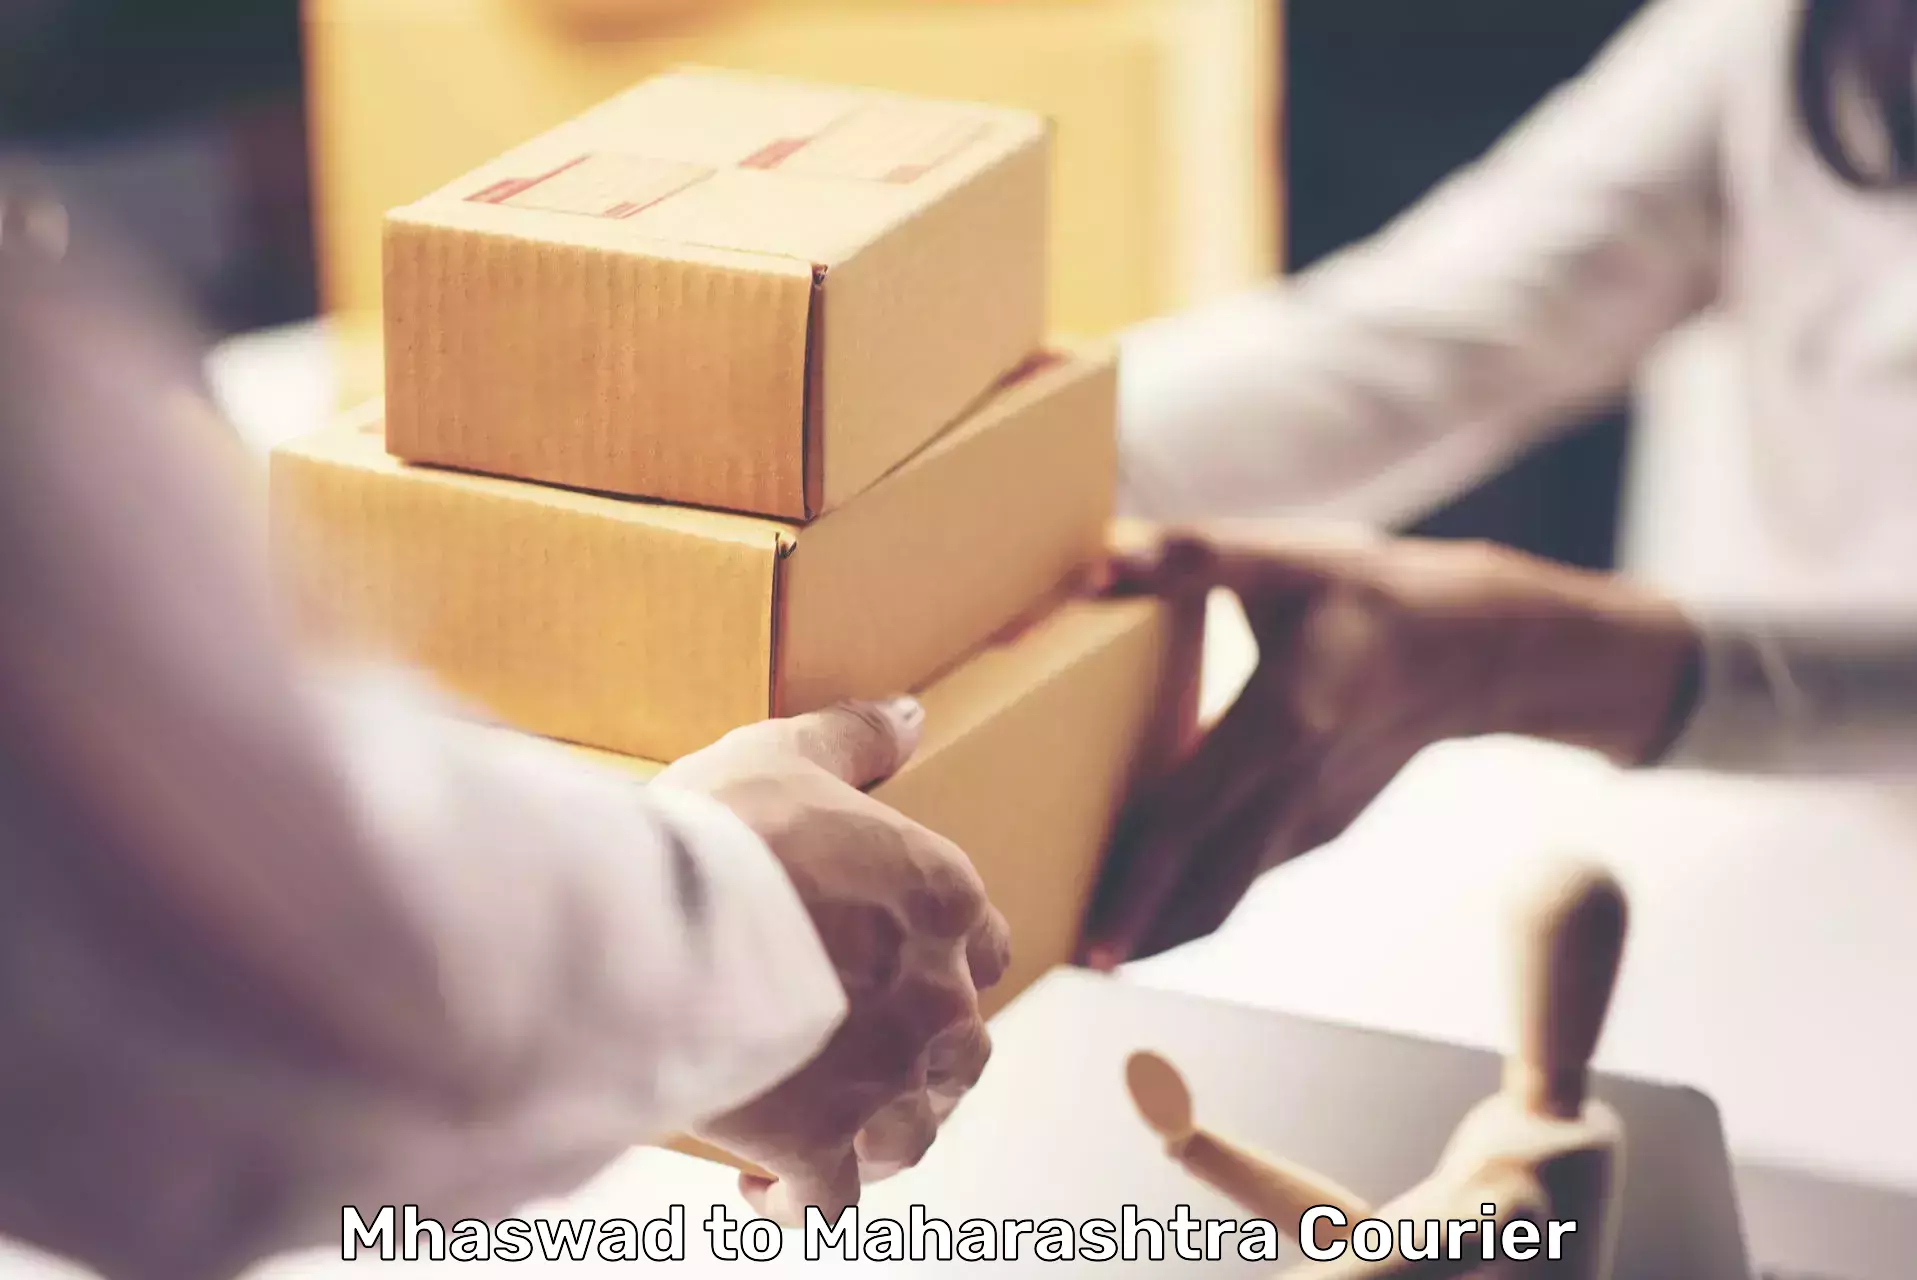 Courier service innovation Mhaswad to Mhaswad